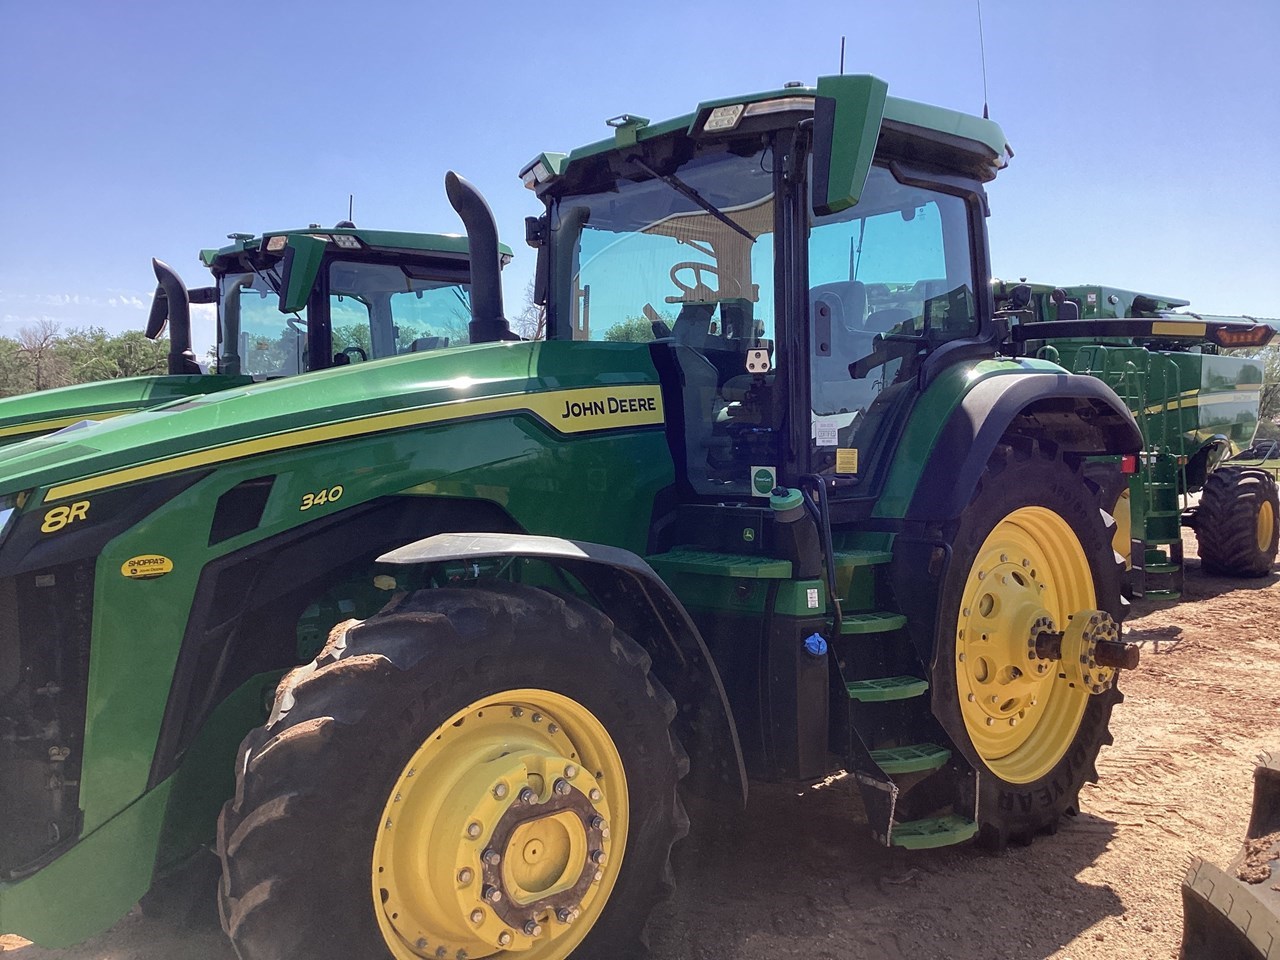 2021 John Deere 8r 340 Tractor Row Crop For Sale In Rotan Texas 7468